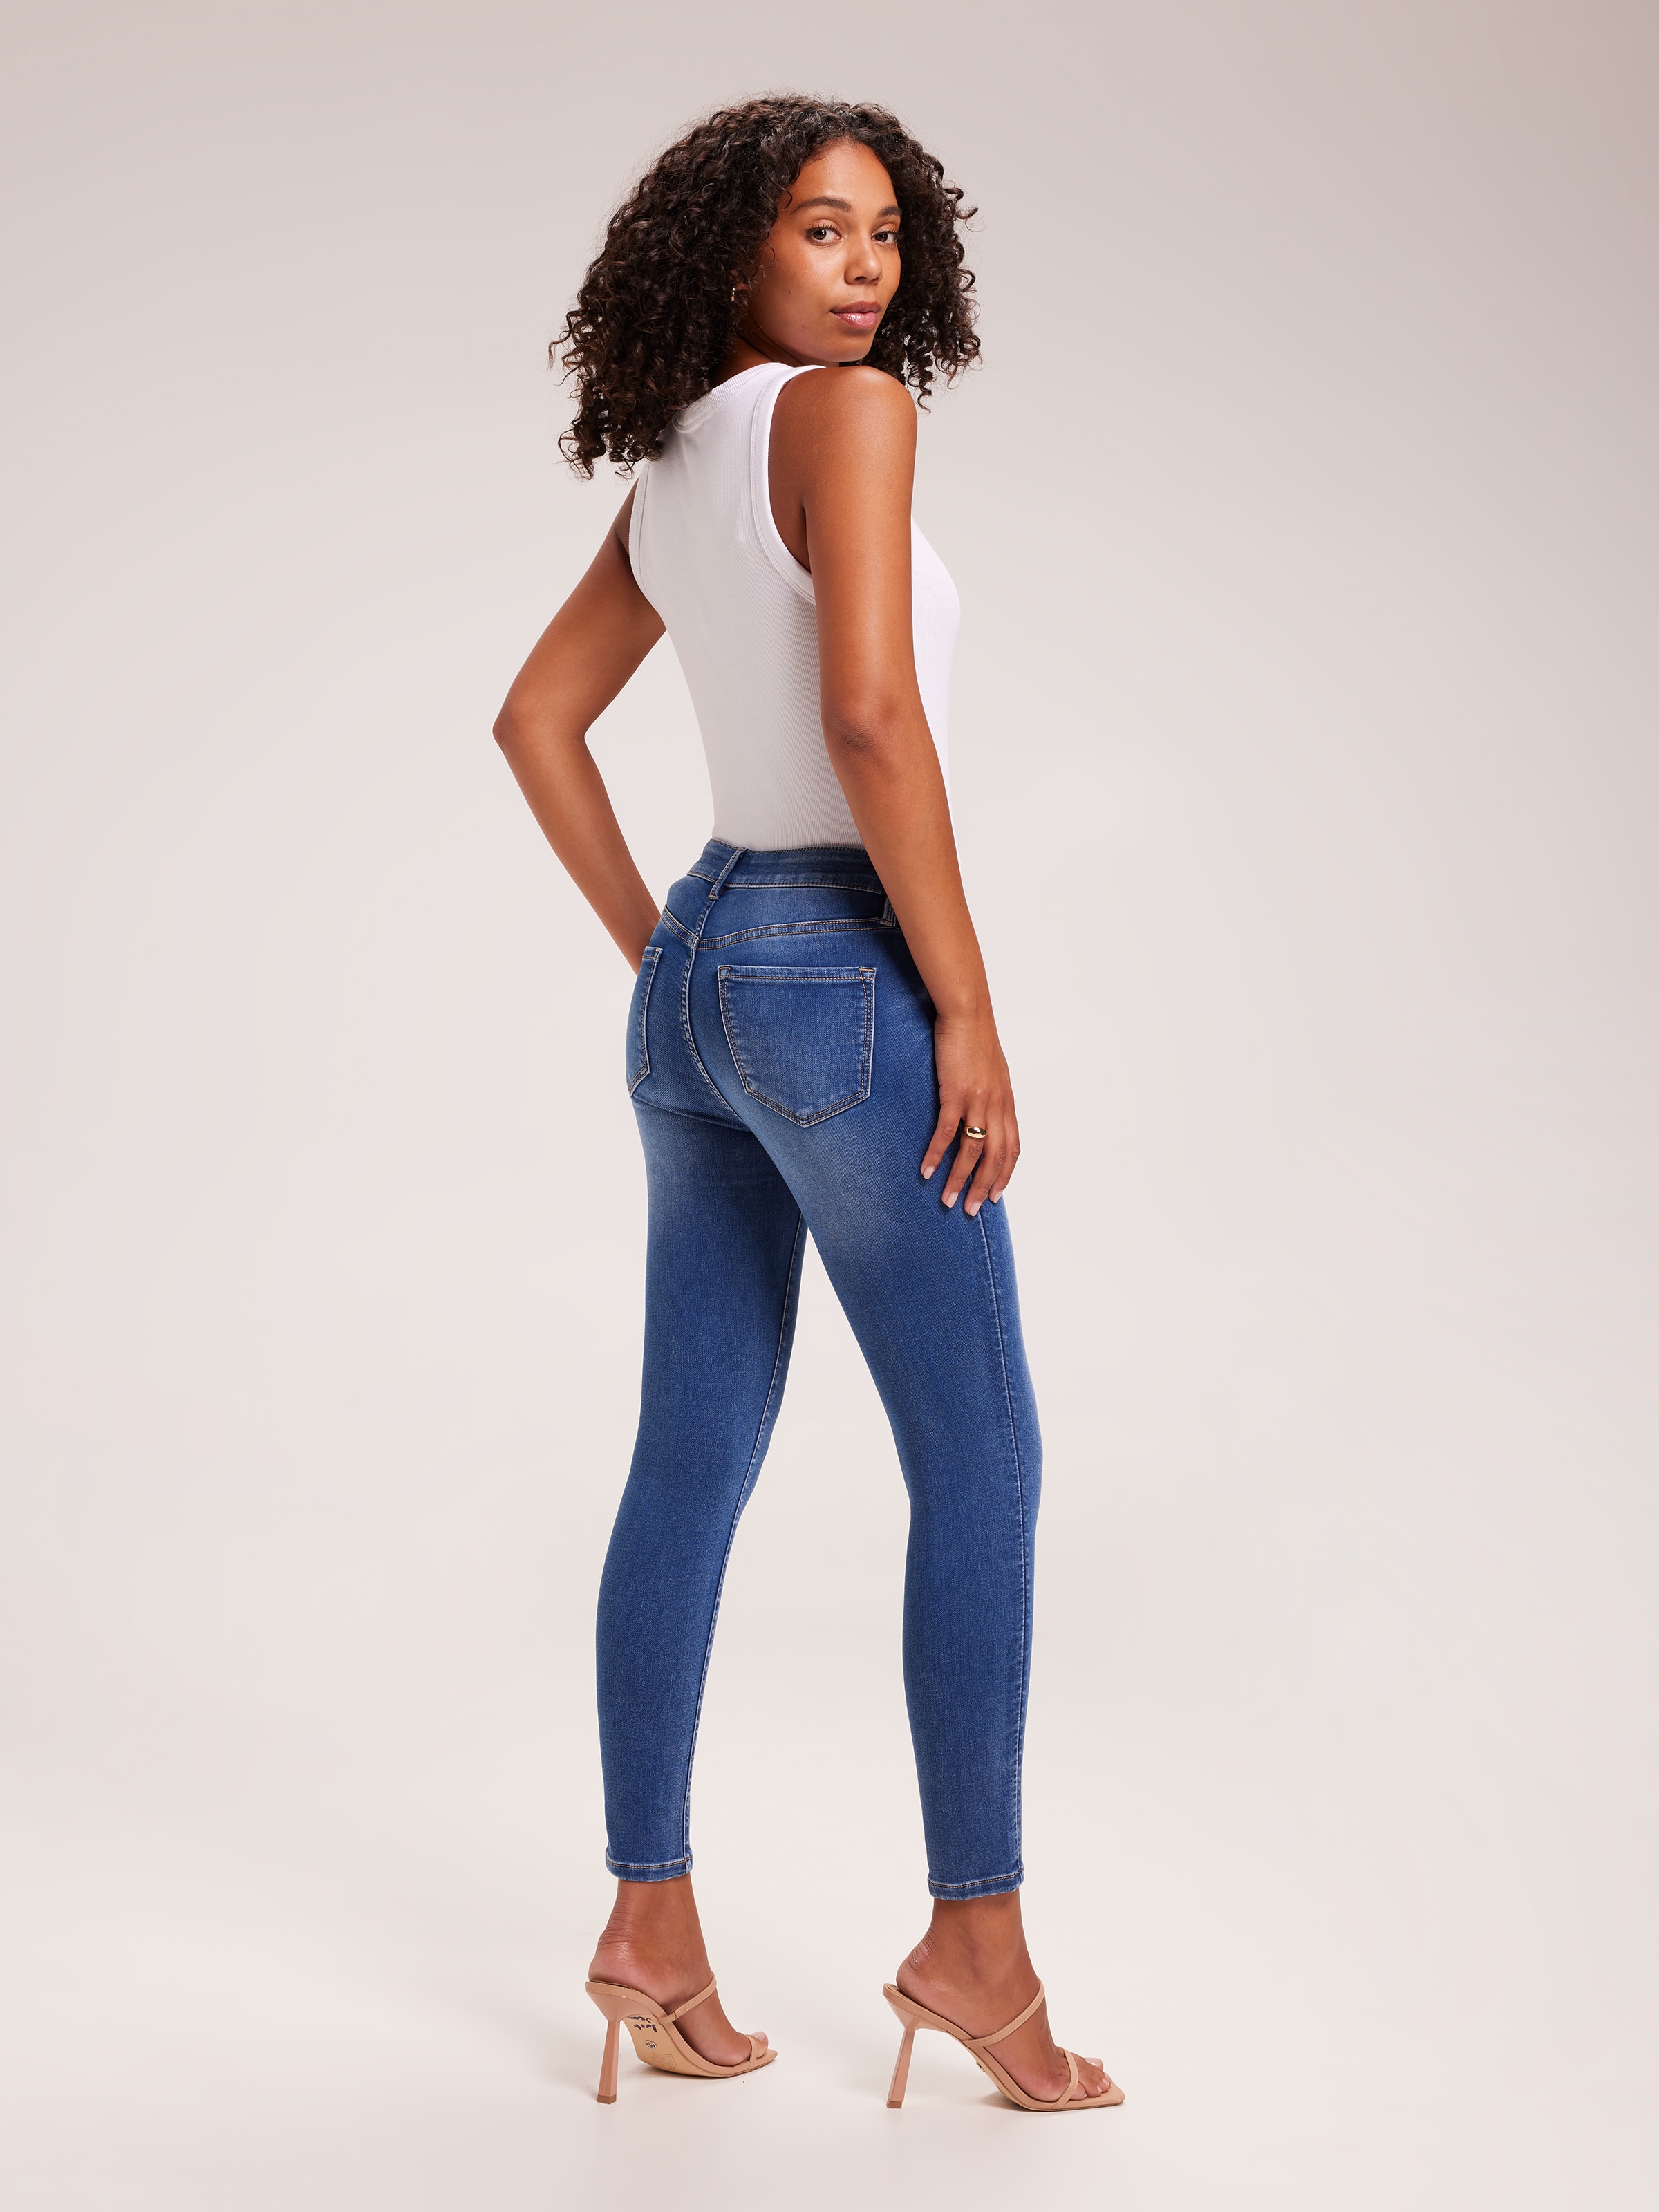 Buy Mid Blue Super Skinny Ankle Length Jeans For Women